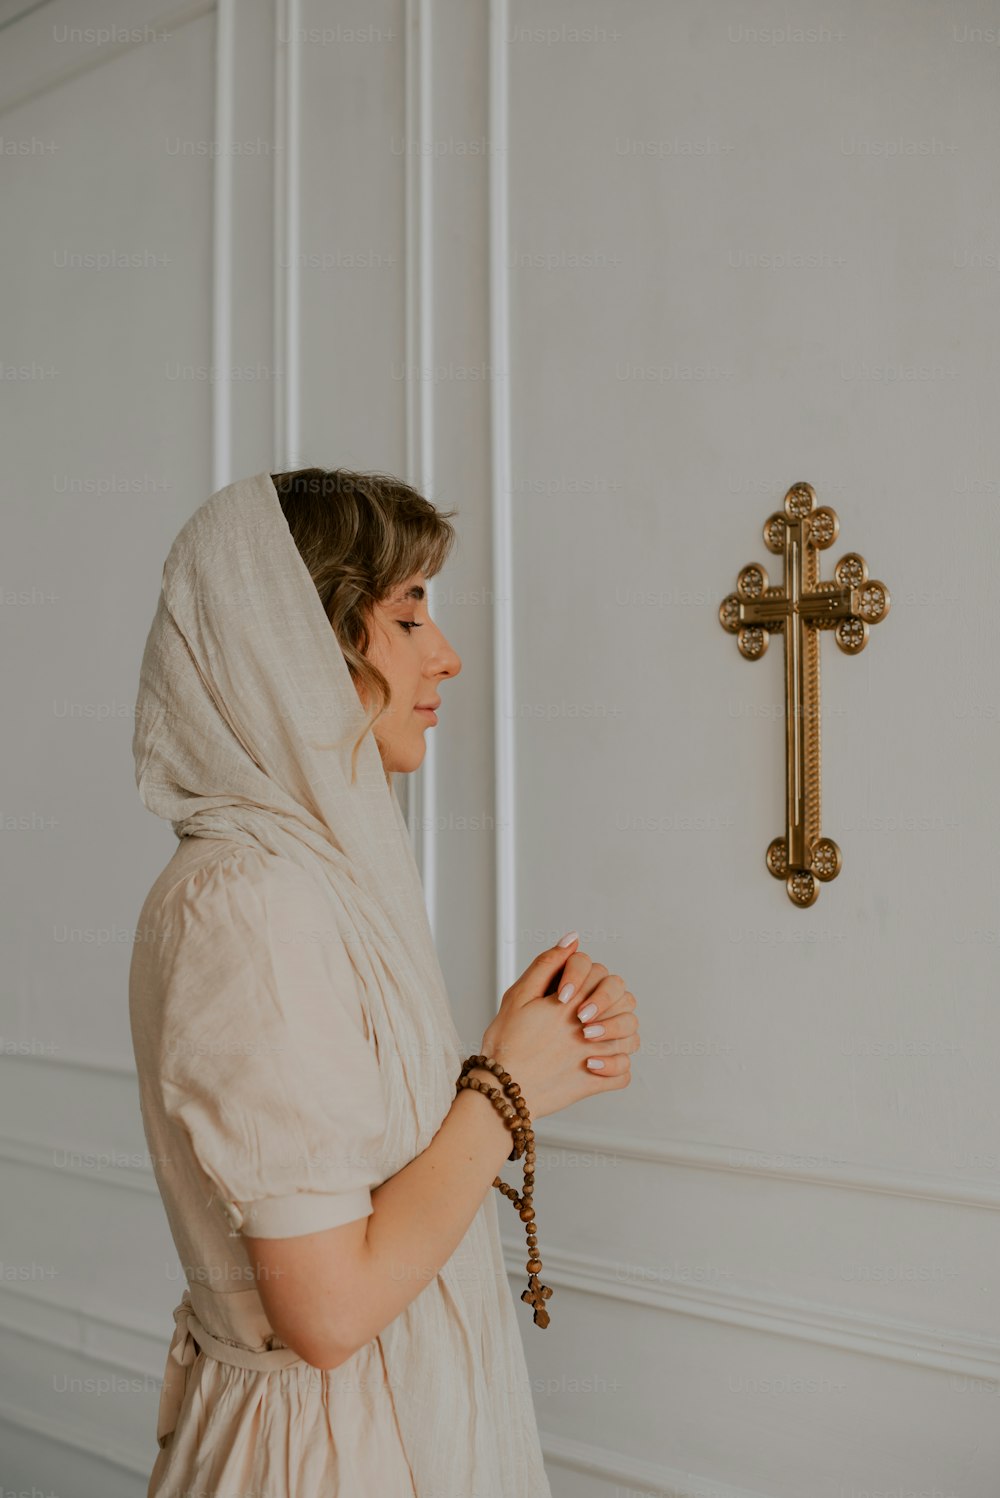 Una mujer parada frente a una cruz